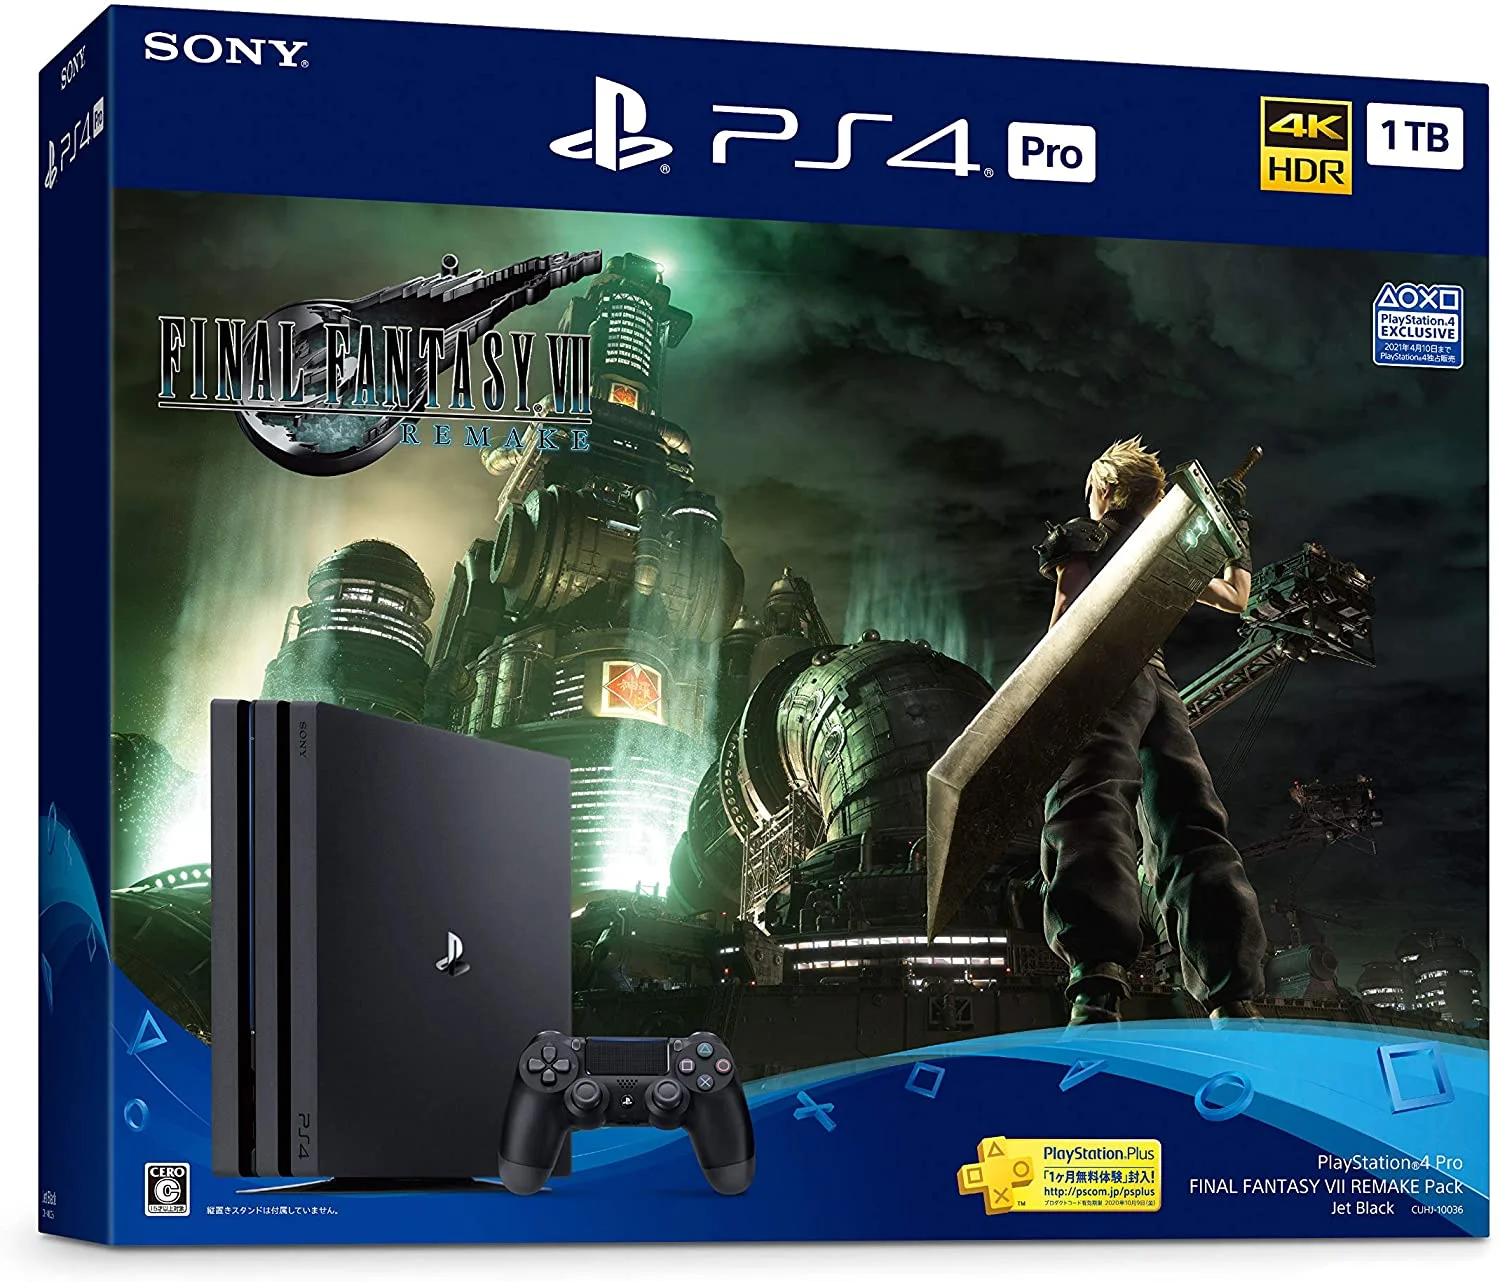  Sony PlayStation 4 Pro Final Fantasy VII Remake Bundle